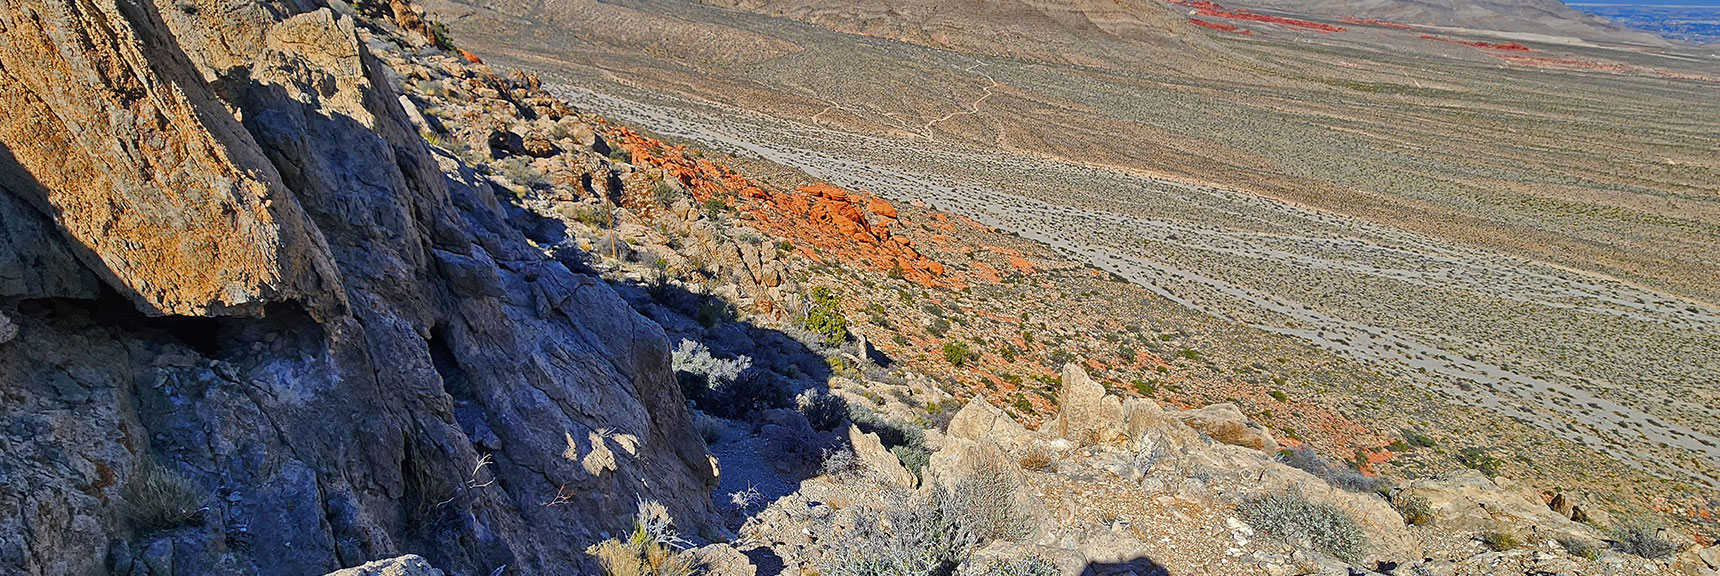 Begin Brownstone Basin Descent. Brief Class 3 Stretch Gets You to Gradual Slope Below. | Gray Cap Ridge / Brownstone Basin Loop | La Madre Mountains Wilderness, Nevada